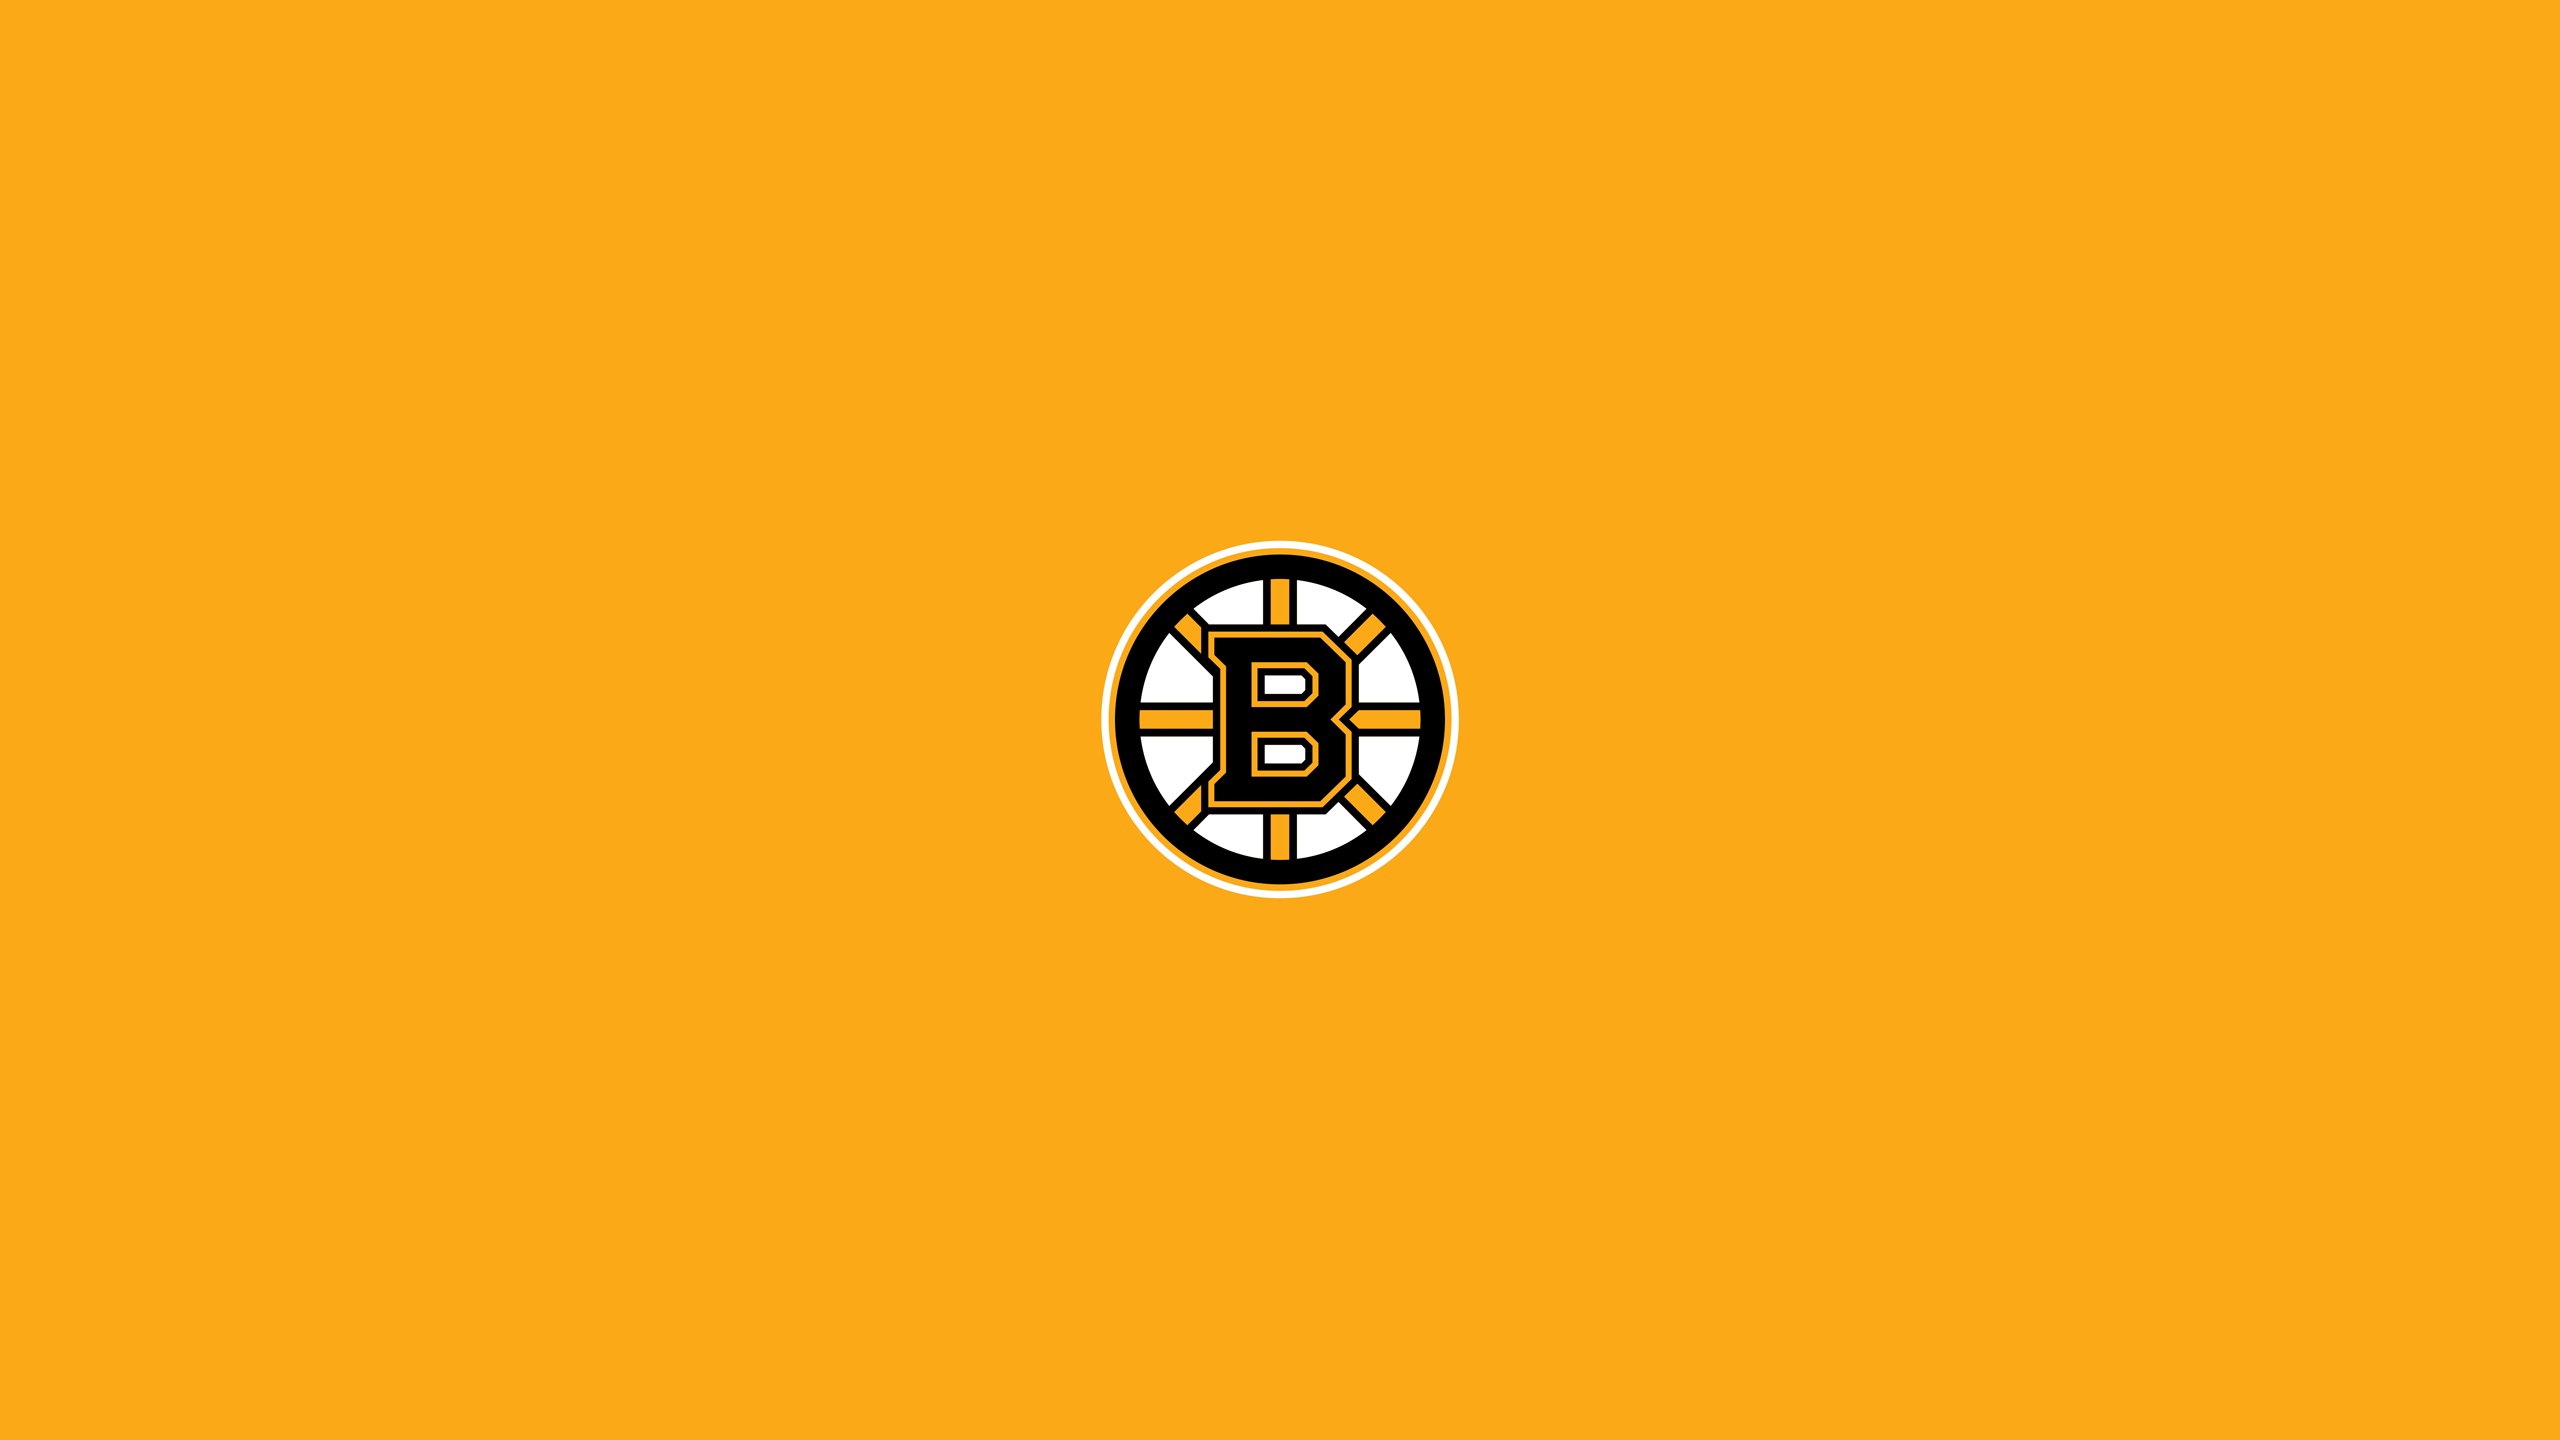 Boston Bruins Nhl Hockey Wallpaper